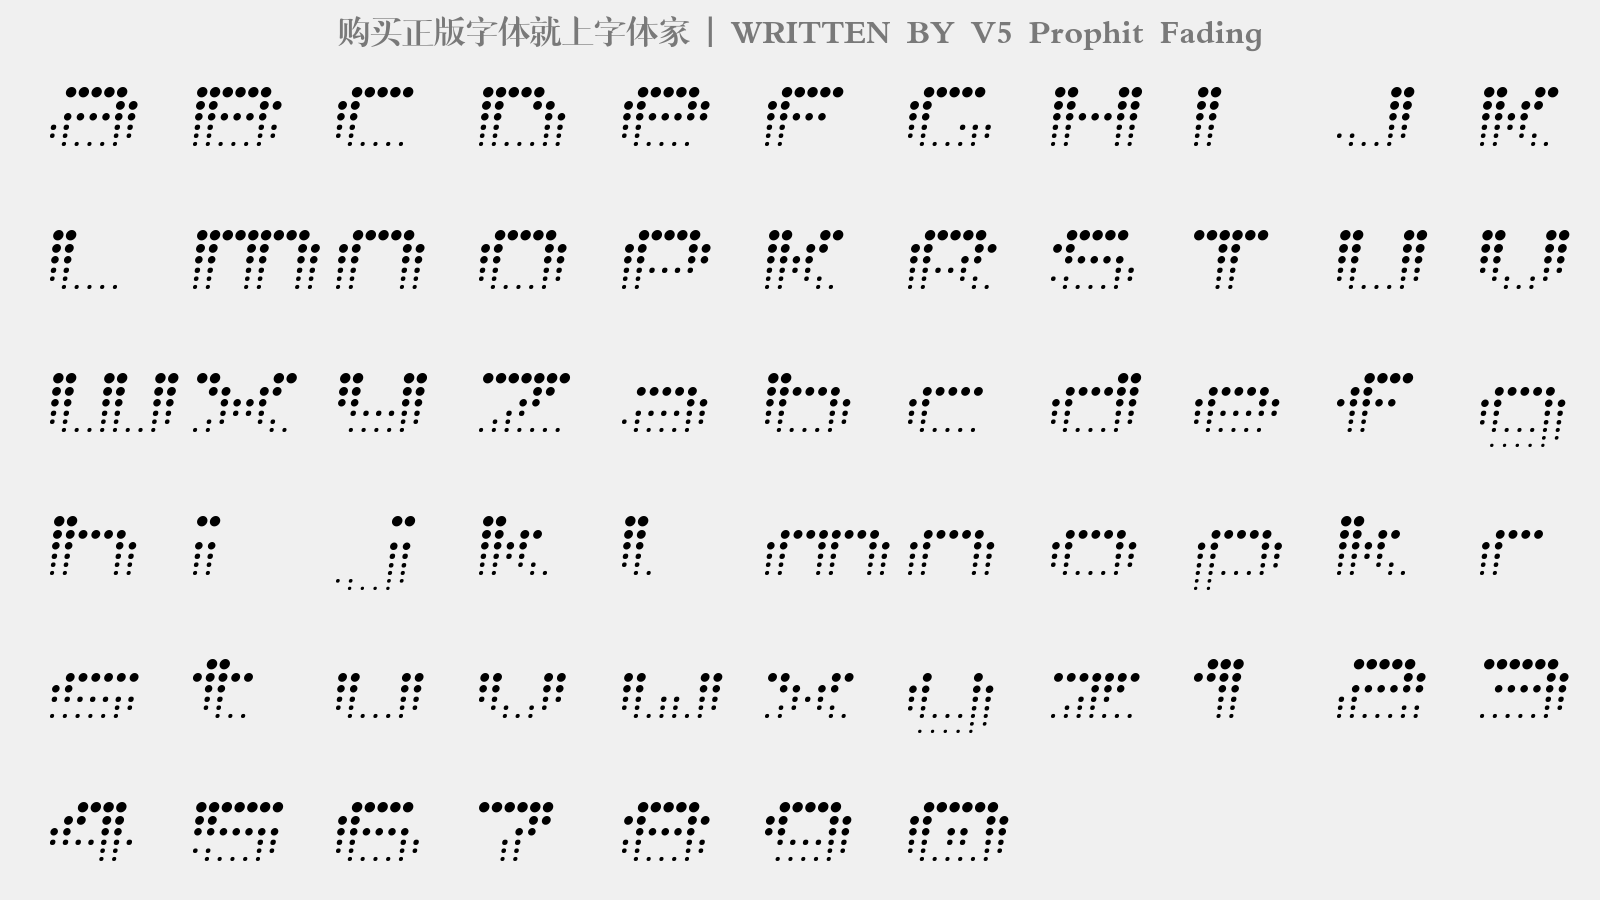 V5 Prophit Fading - 大写字母/小写字母/数字